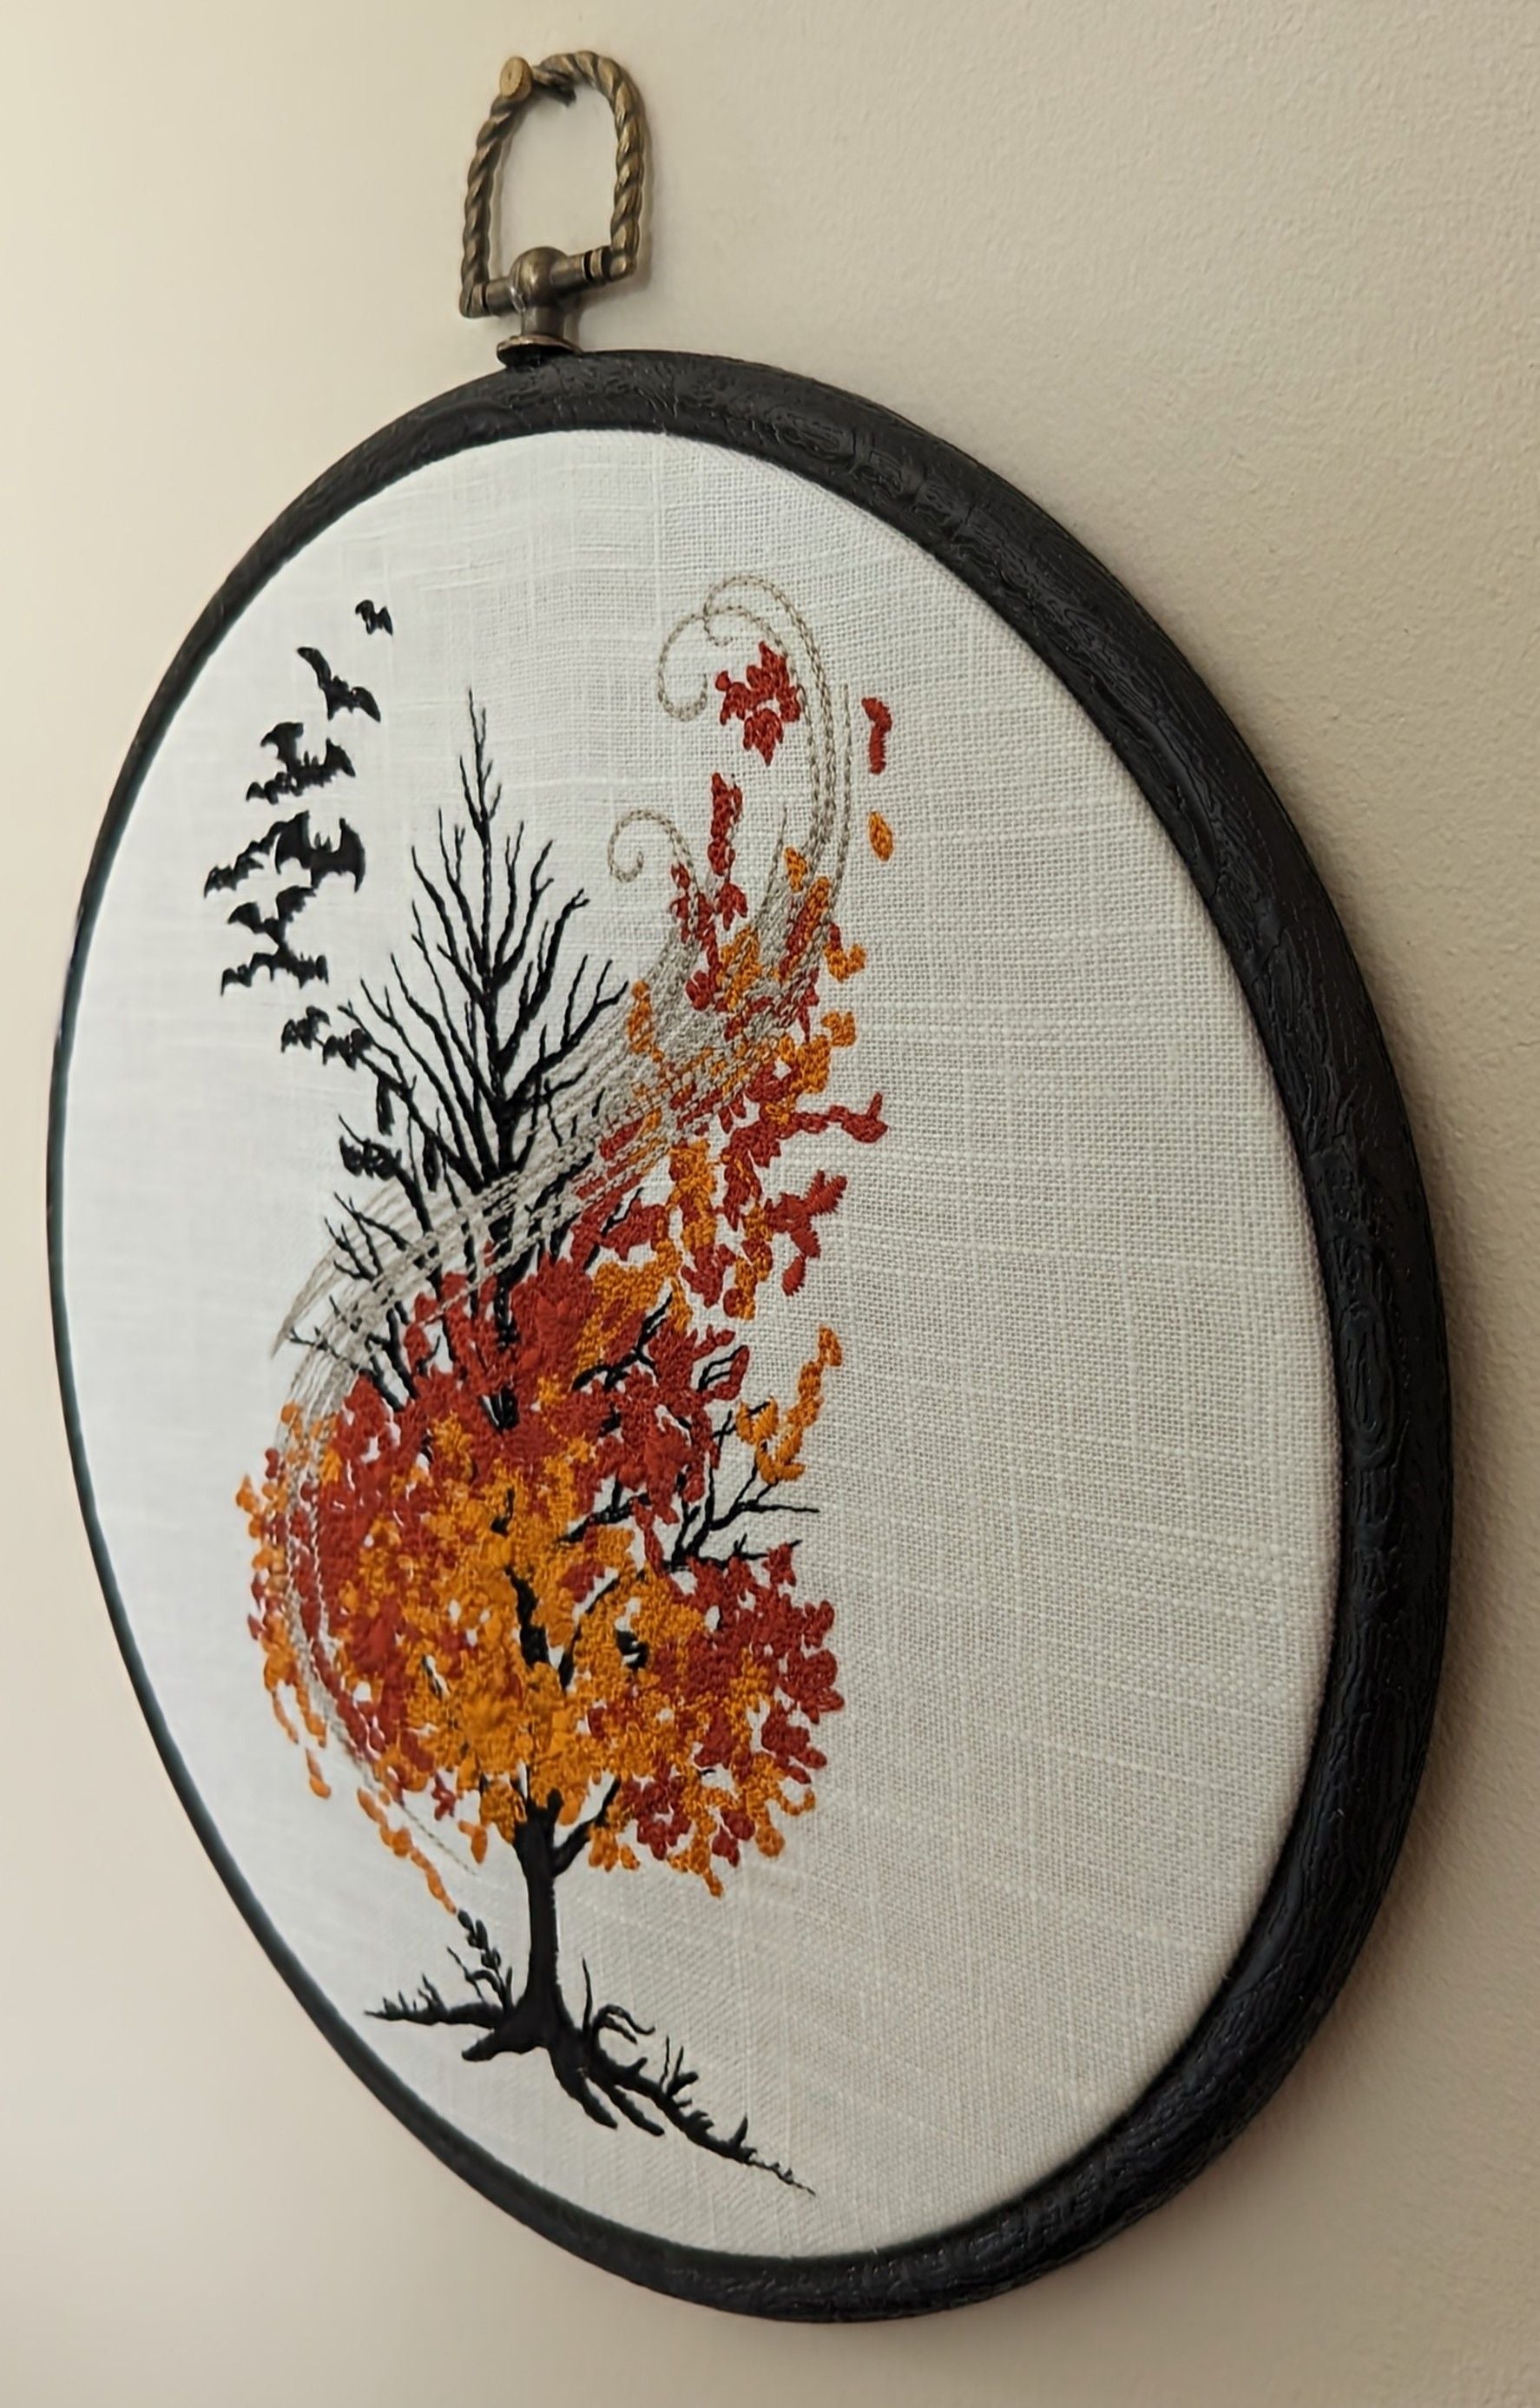 Autumn Tree. Machine embroidered 8" hoop art